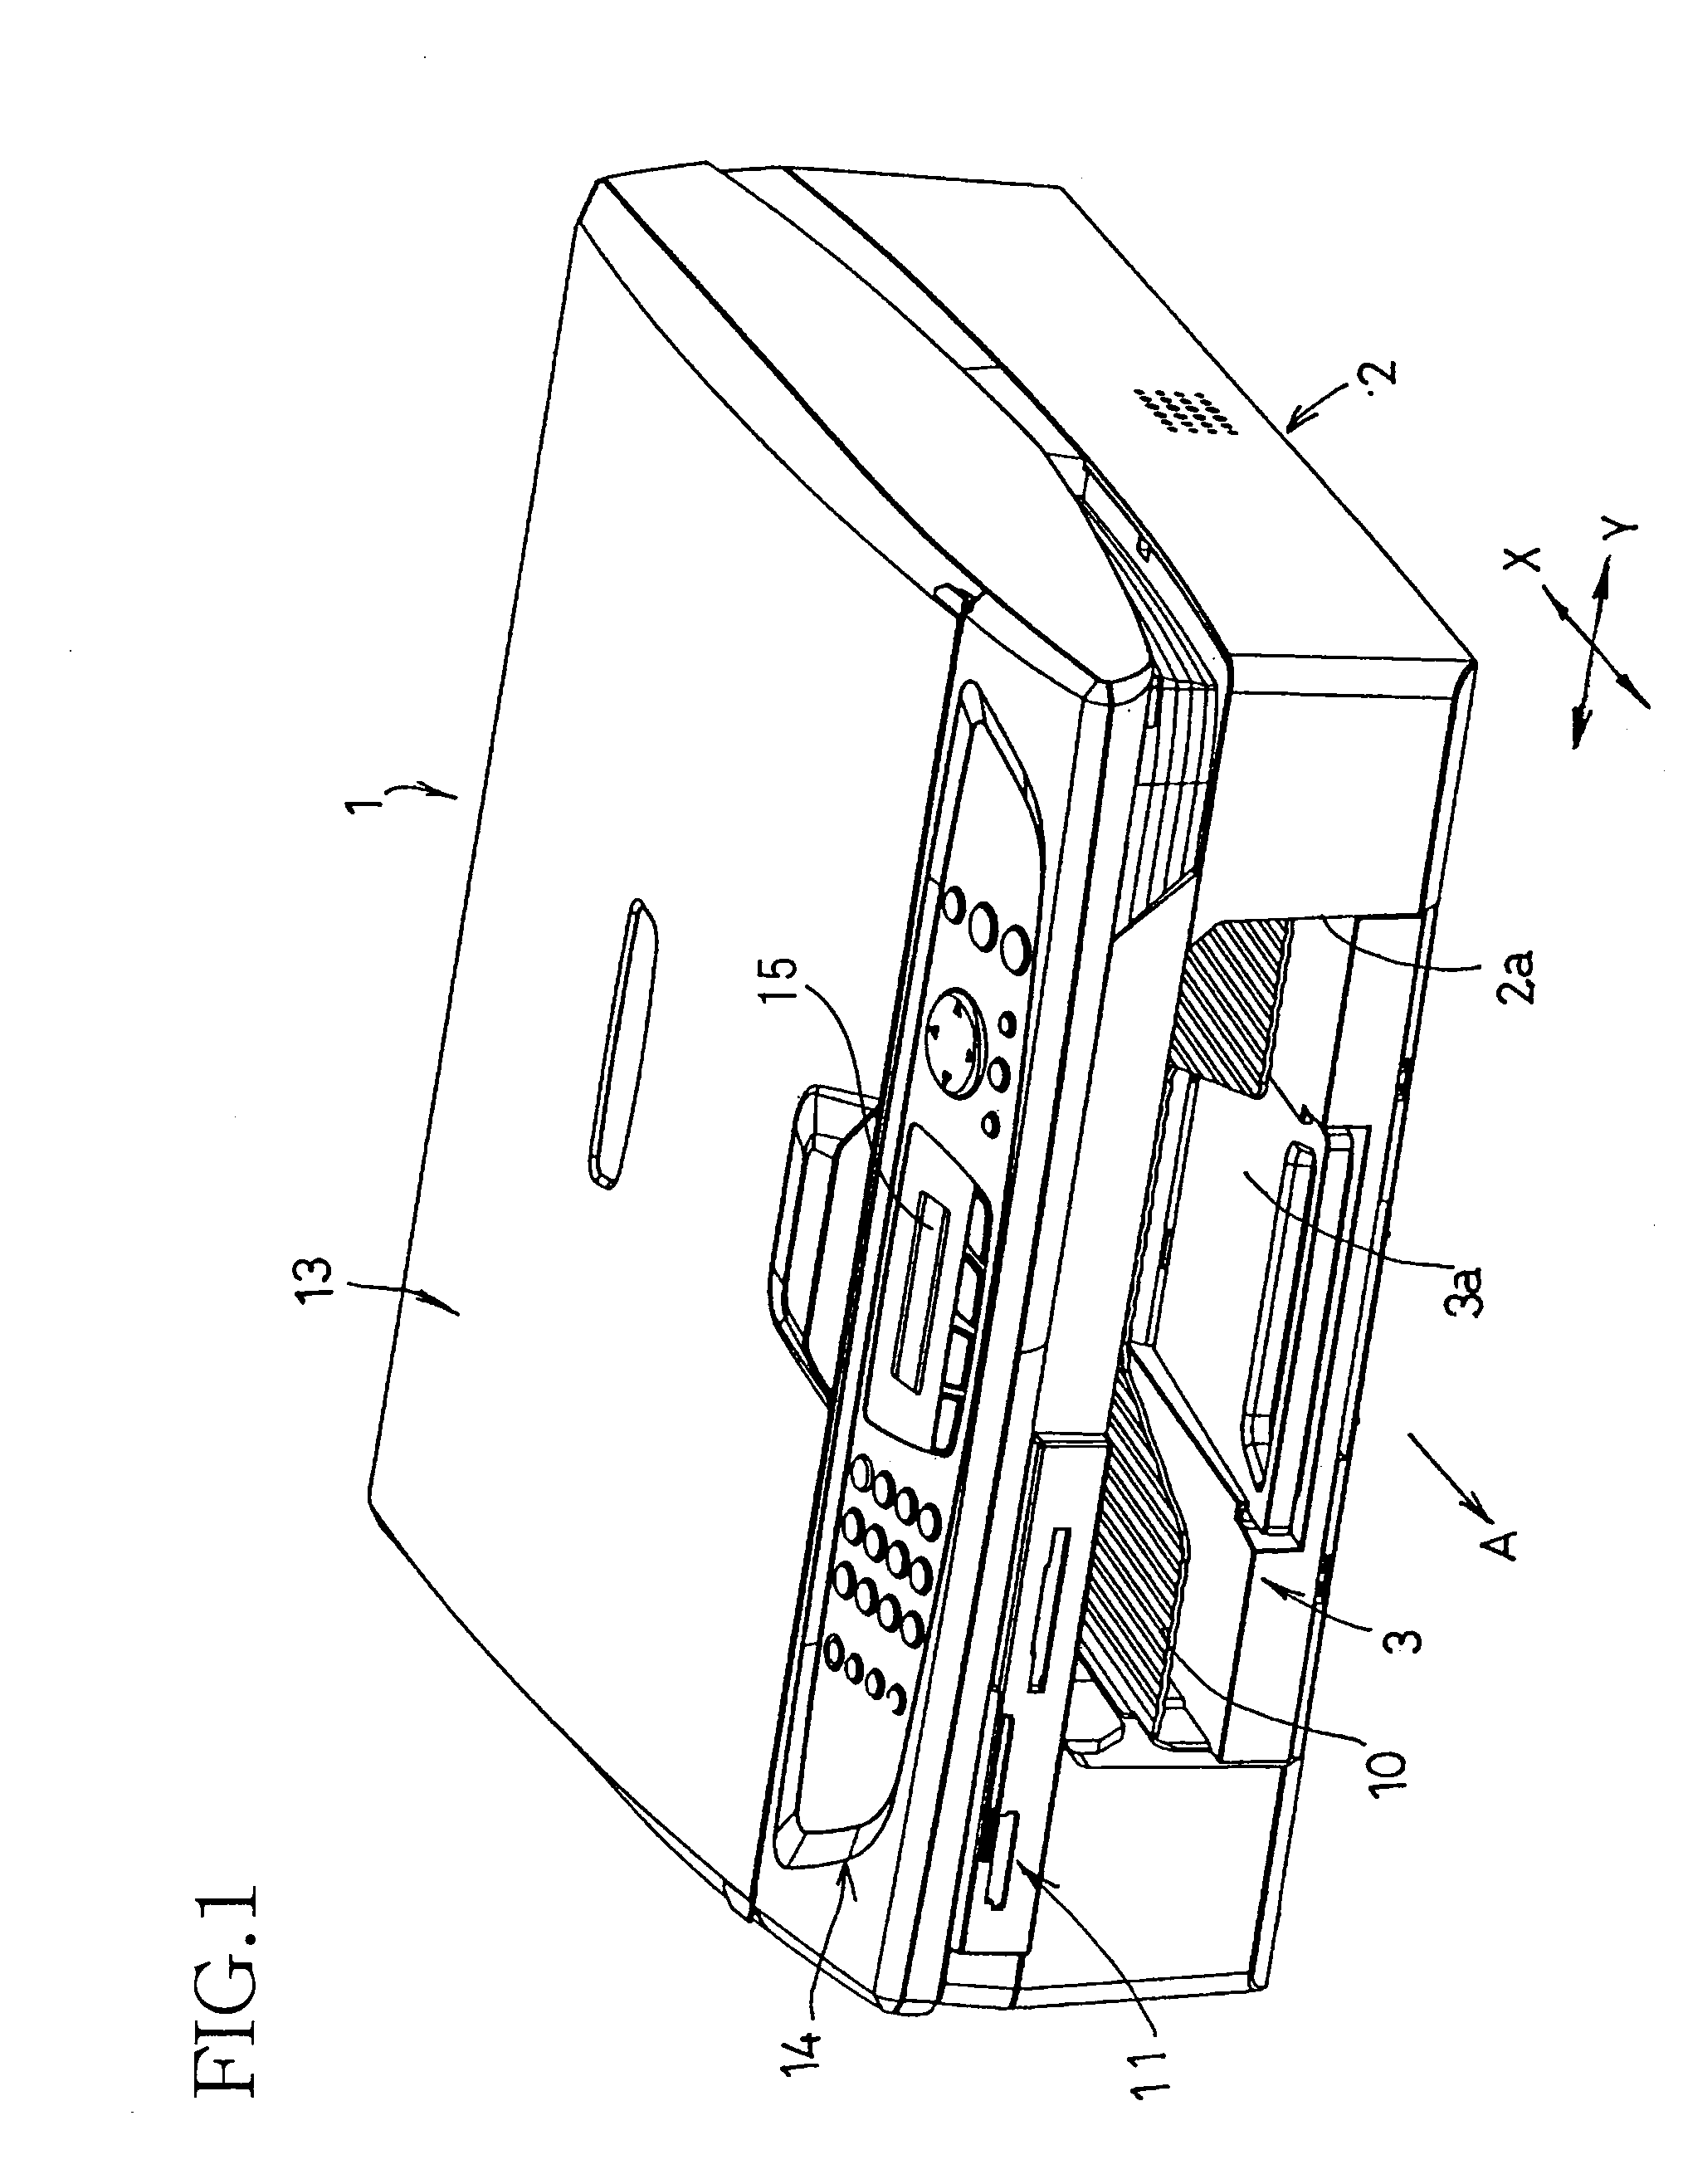 Image-forming apparatus